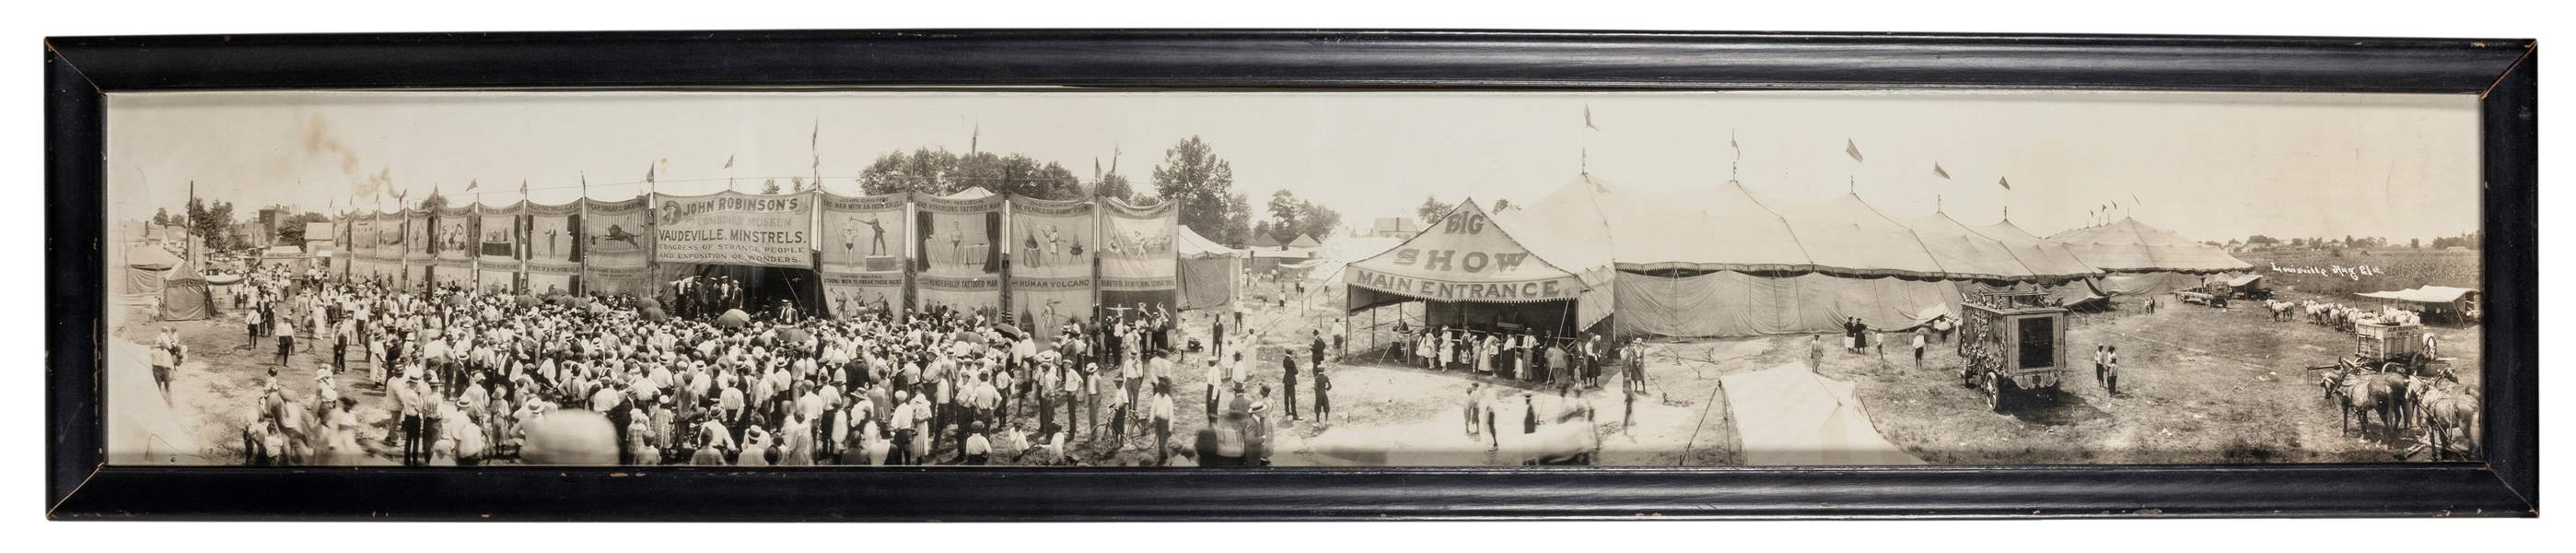  John Robinson Circus / Sideshow Panoramic Photograph. Circa...